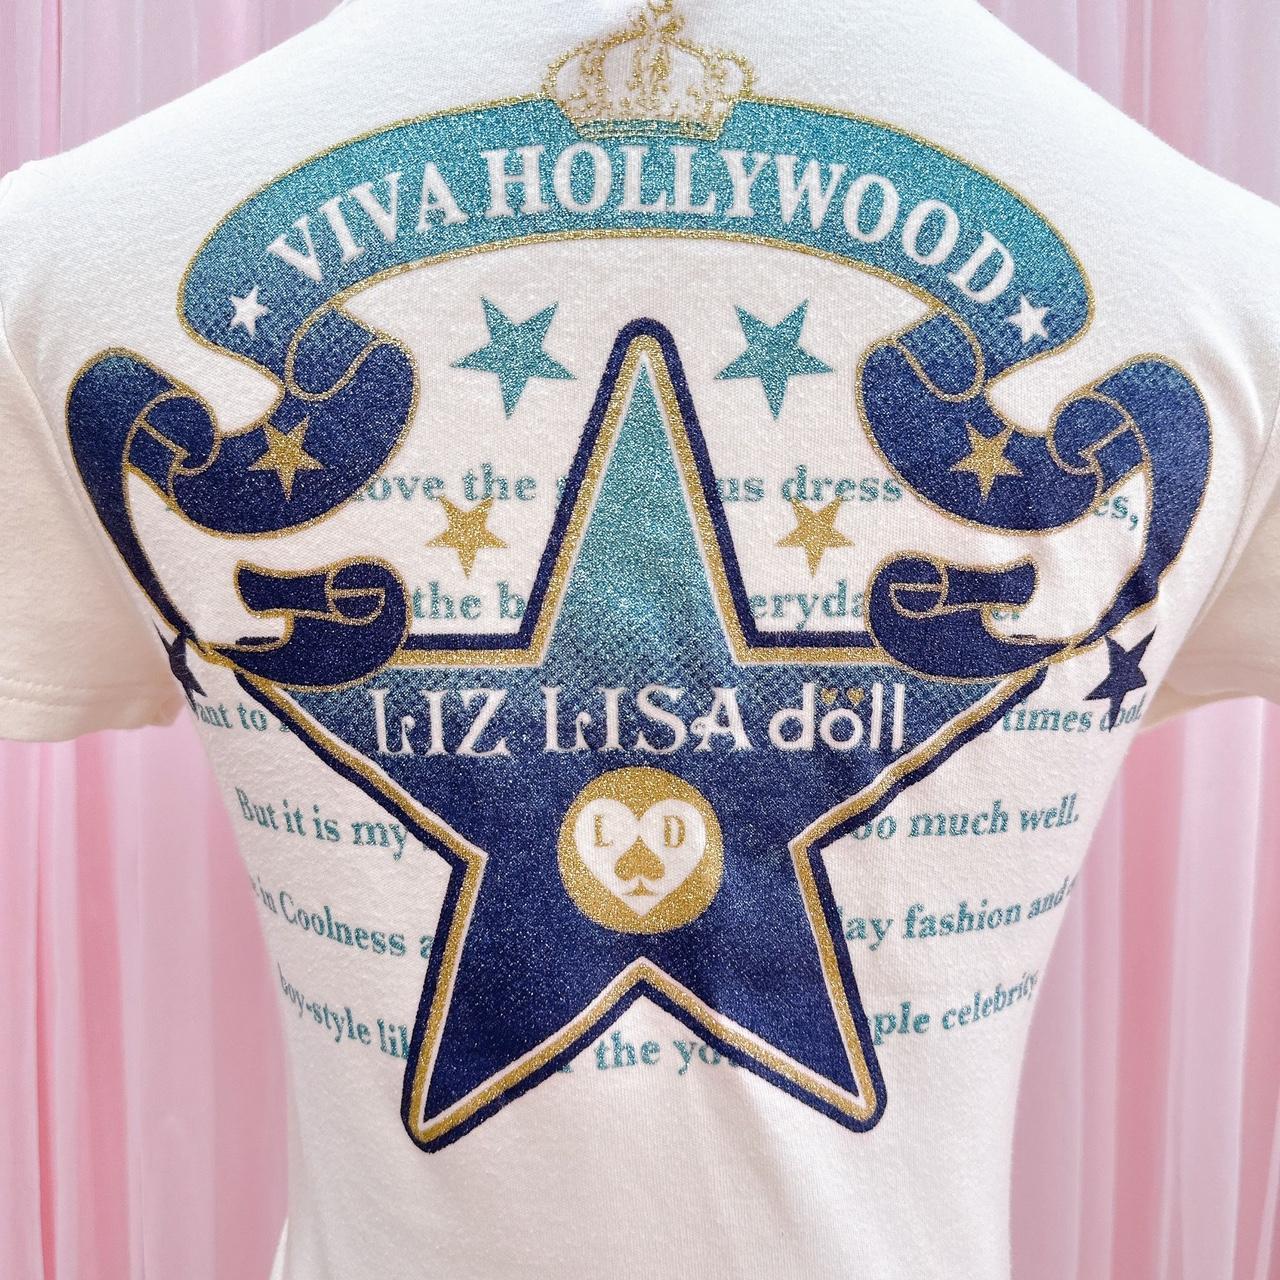 🍒Japan brand Liz Lisa Doll Hollywood glitter